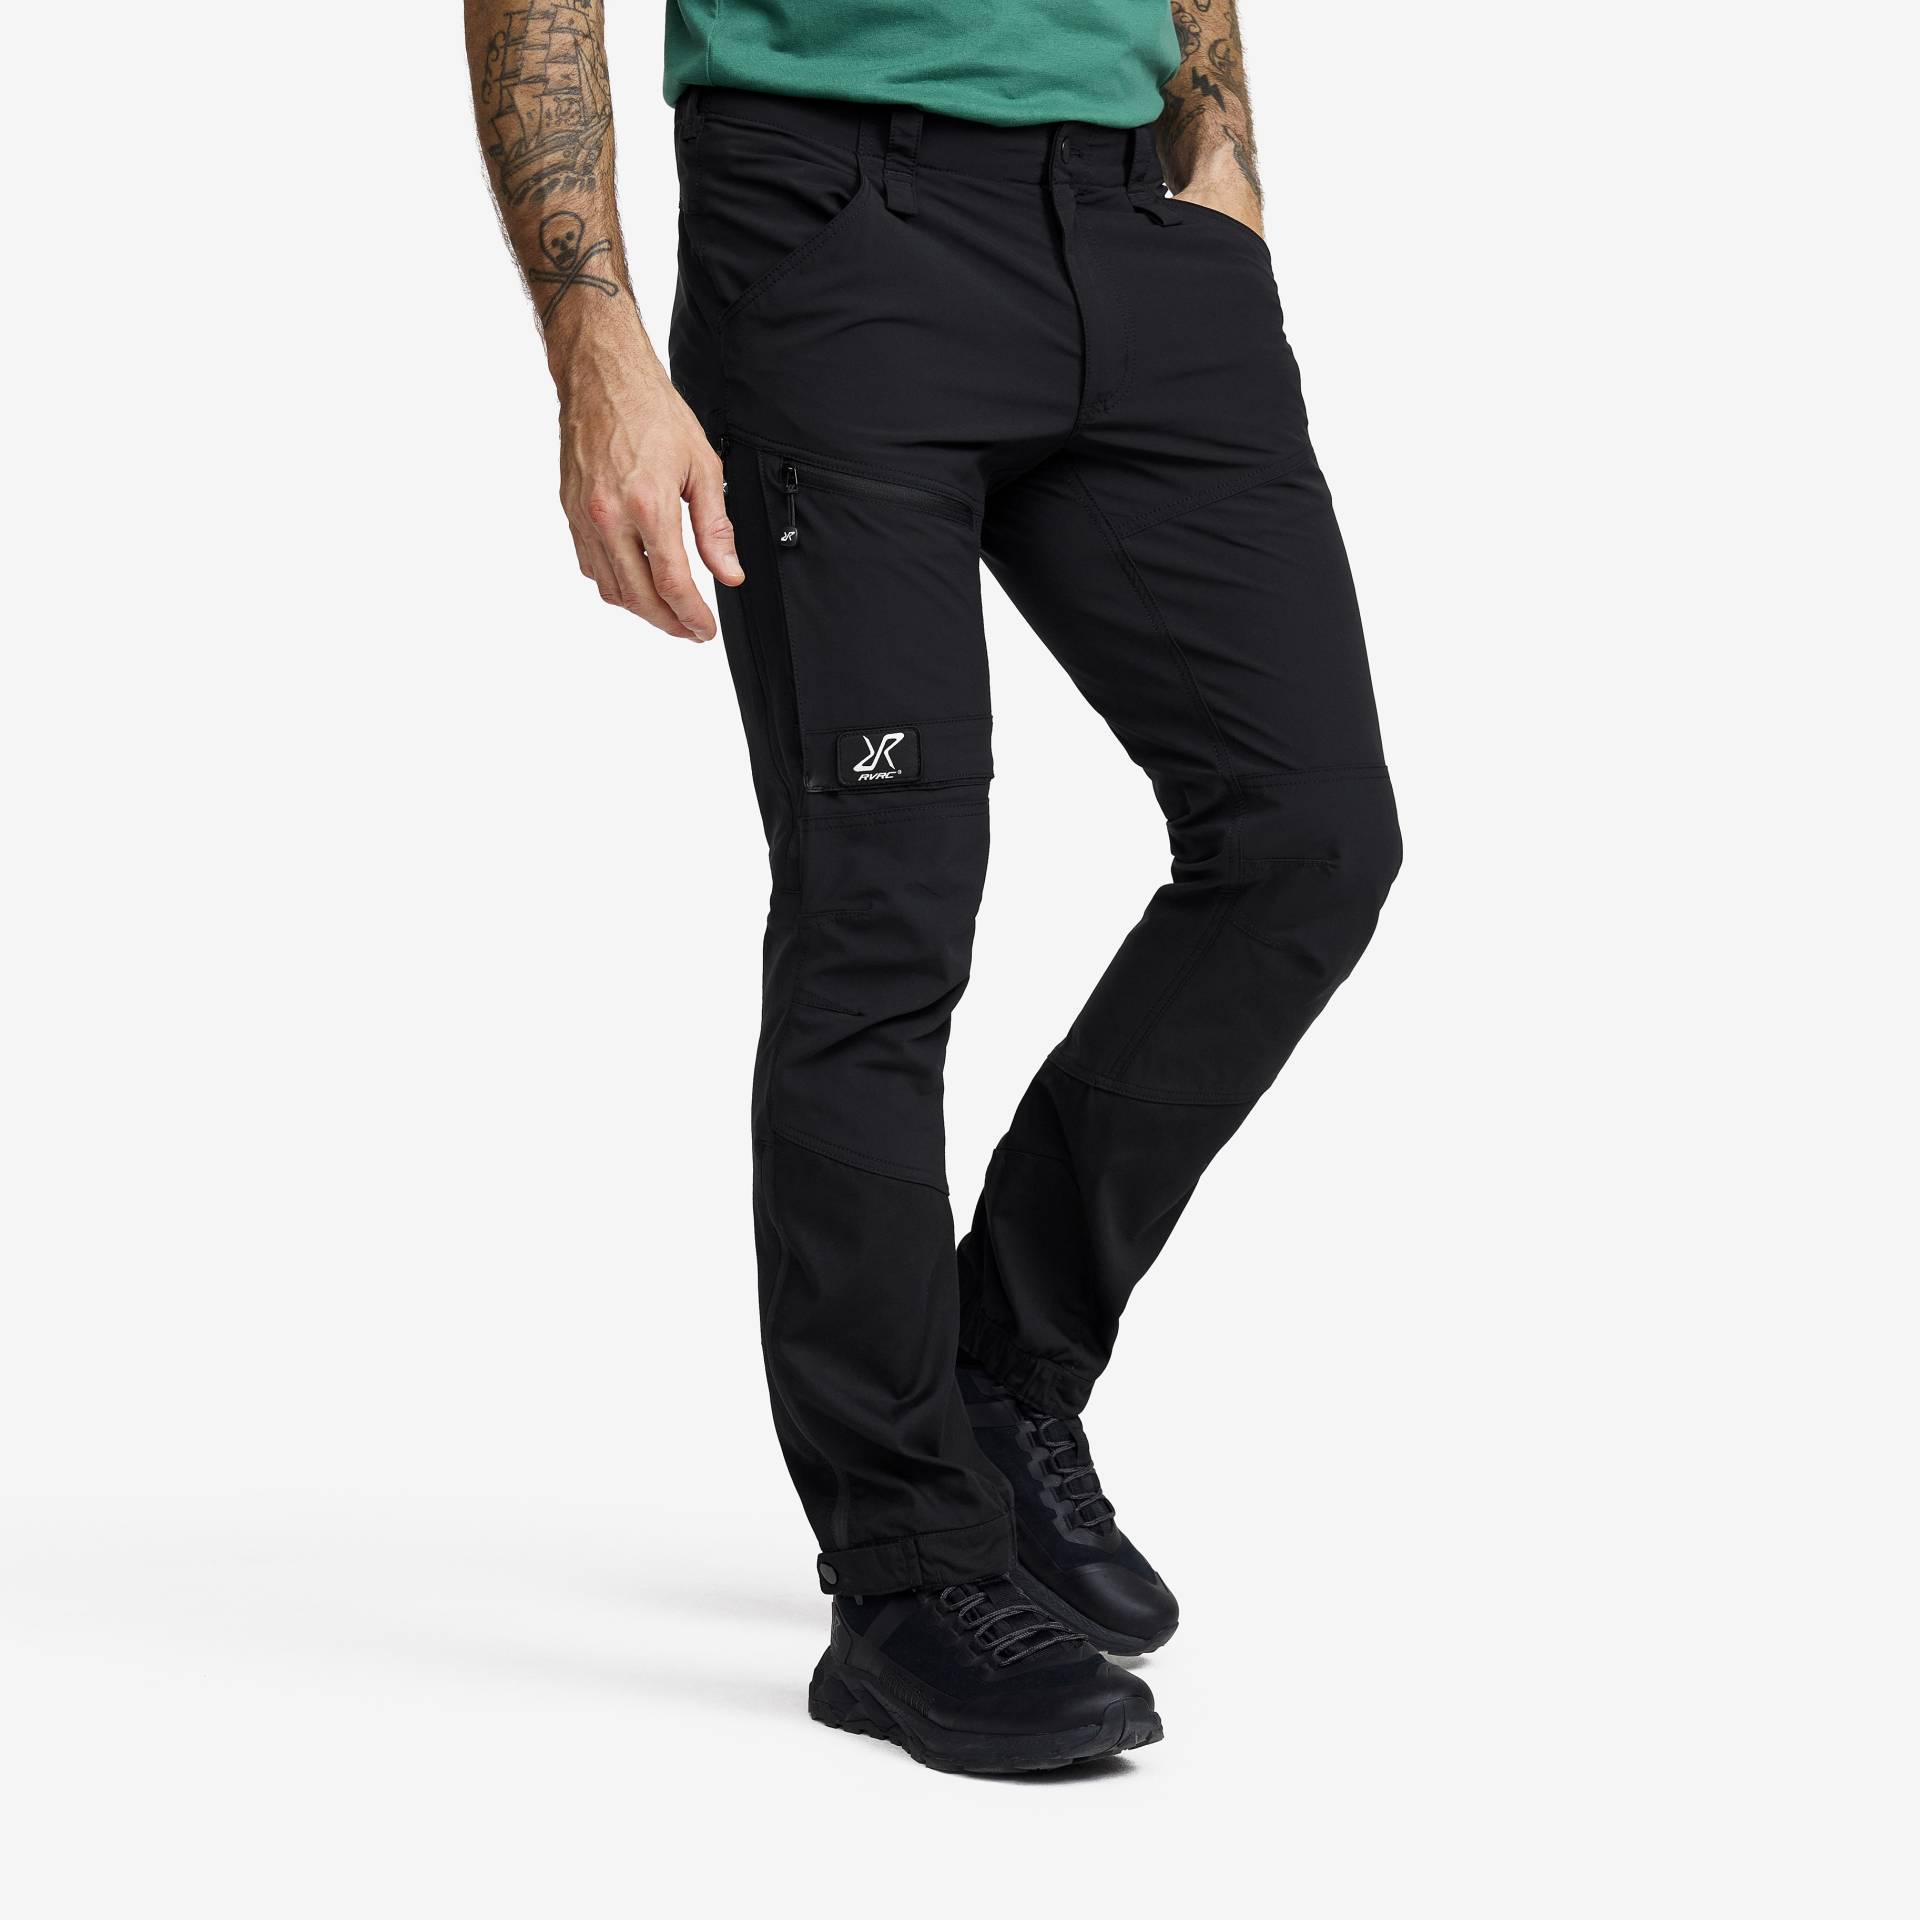 Range Pro Pants Herren Black, Größe:XS - Outdoorhose, Wanderhose & Trekkinghose von RevolutionRace